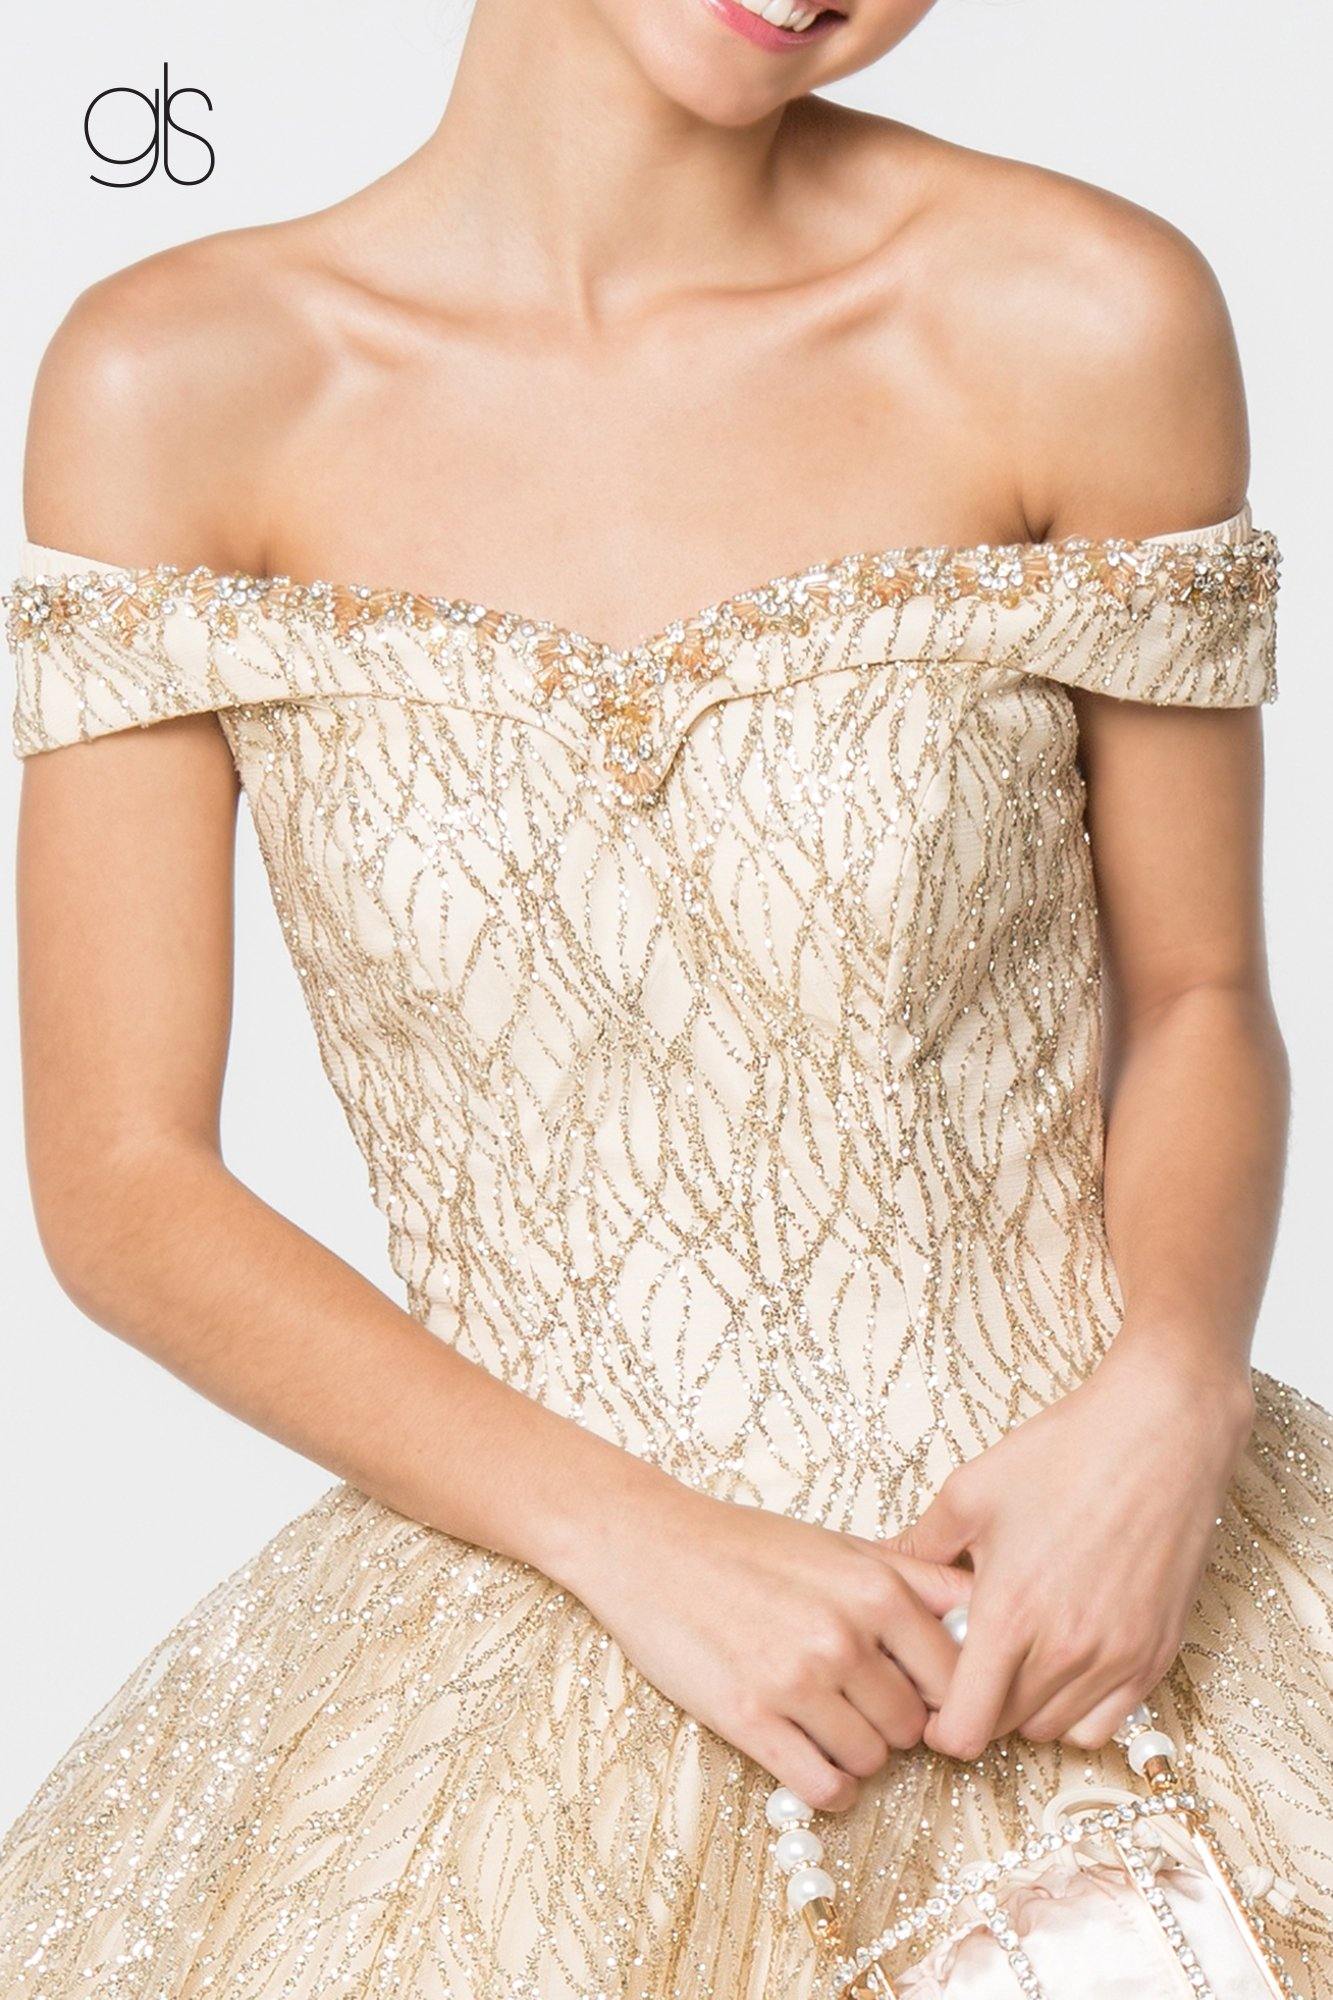 Jewel Accented Glitter Mesh Quinceanera Dress - The Dress Outlet Elizabeth K